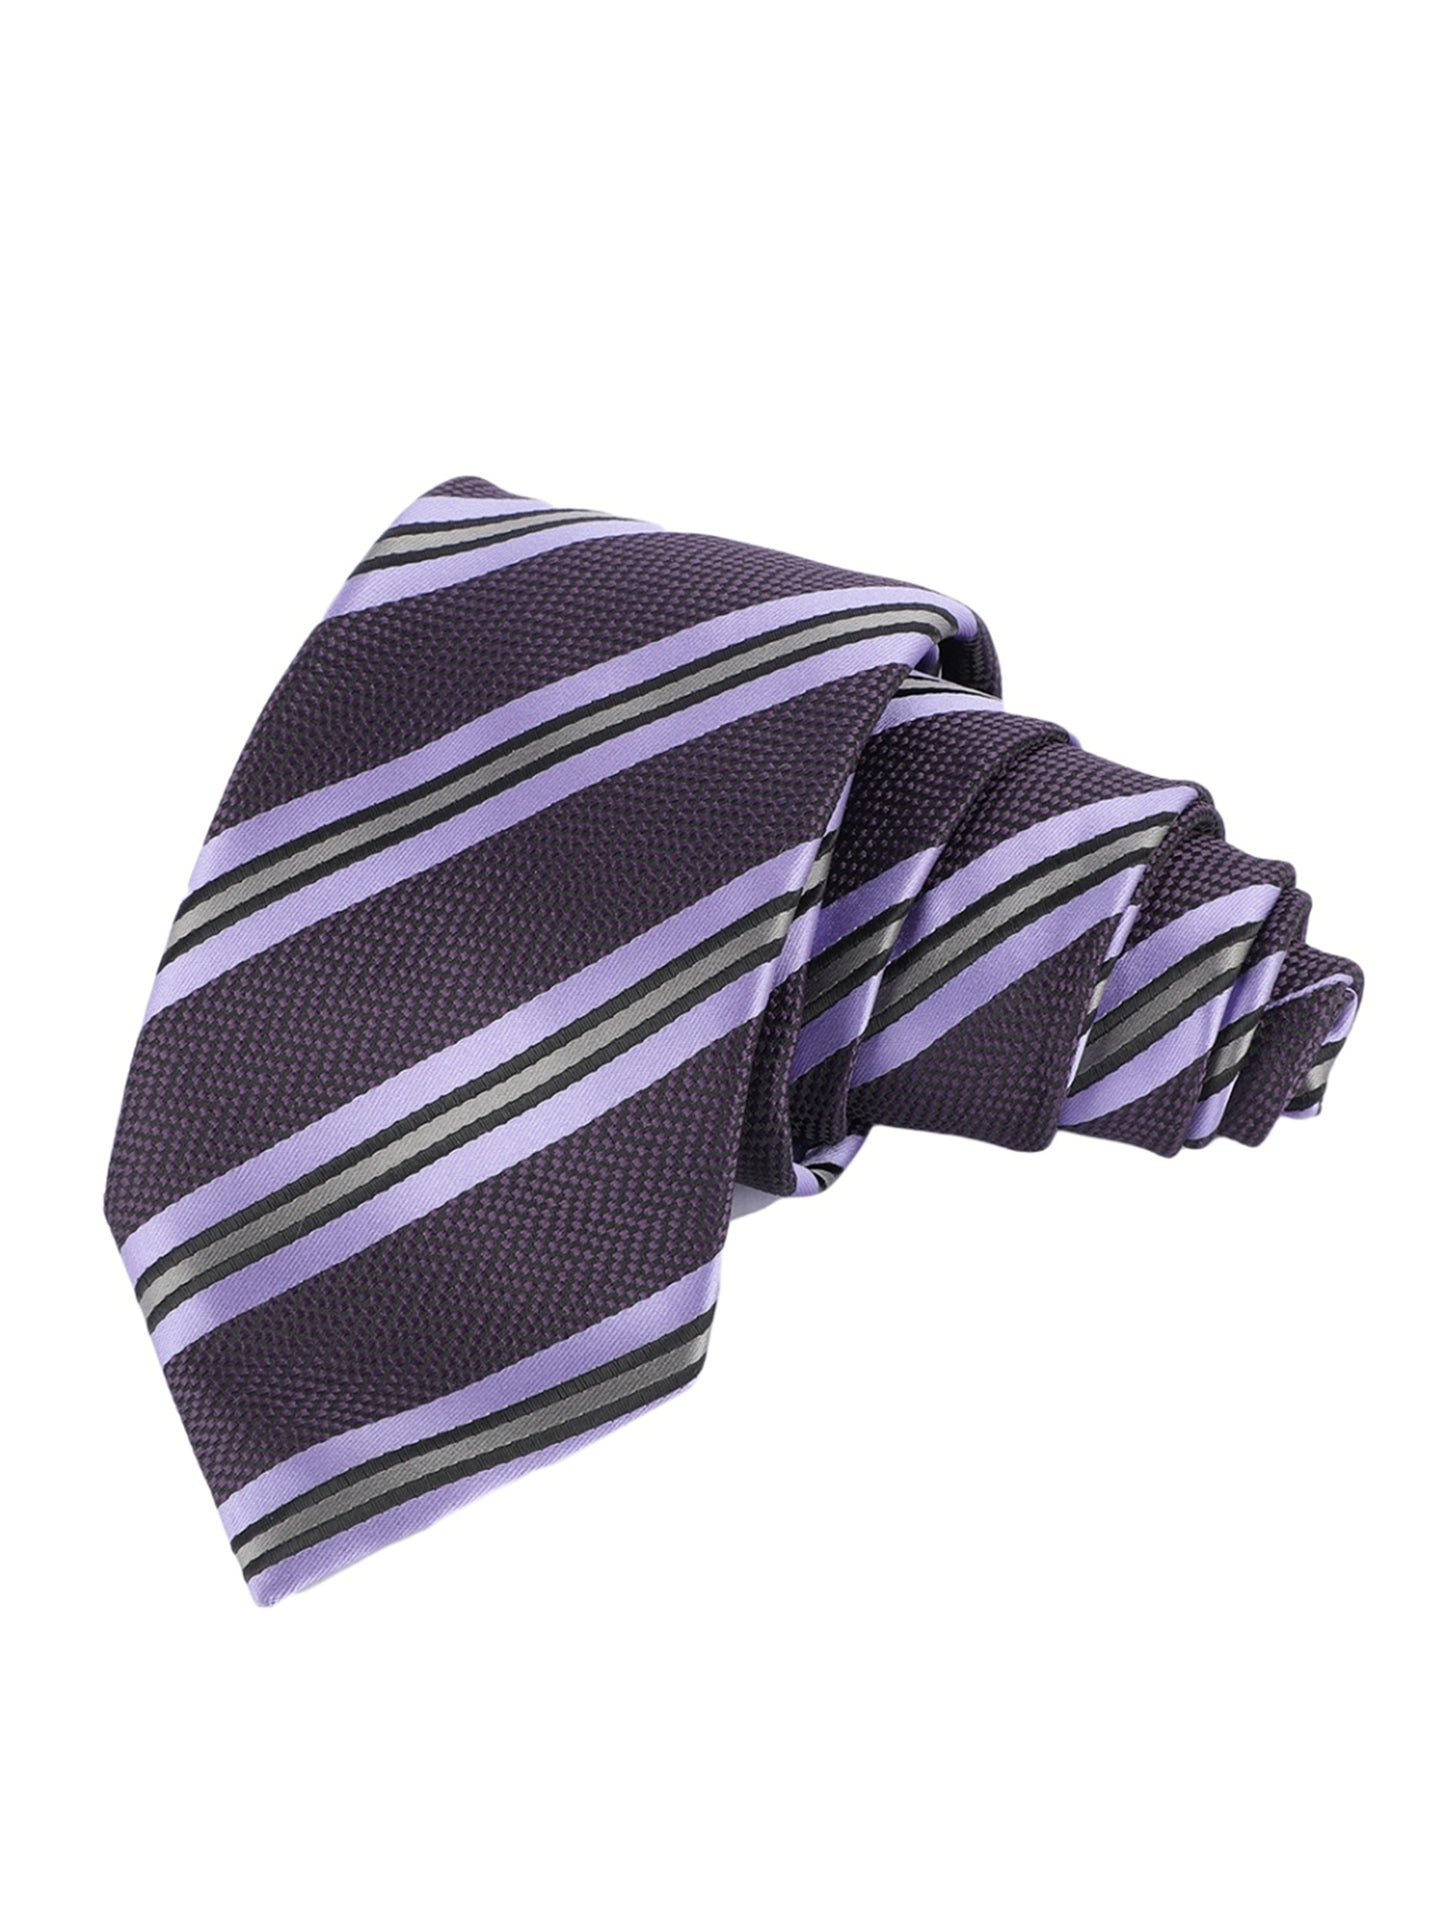 Alvaro Castagnino Microfiber Purple::Multi Colored Stripes Necktie for Men